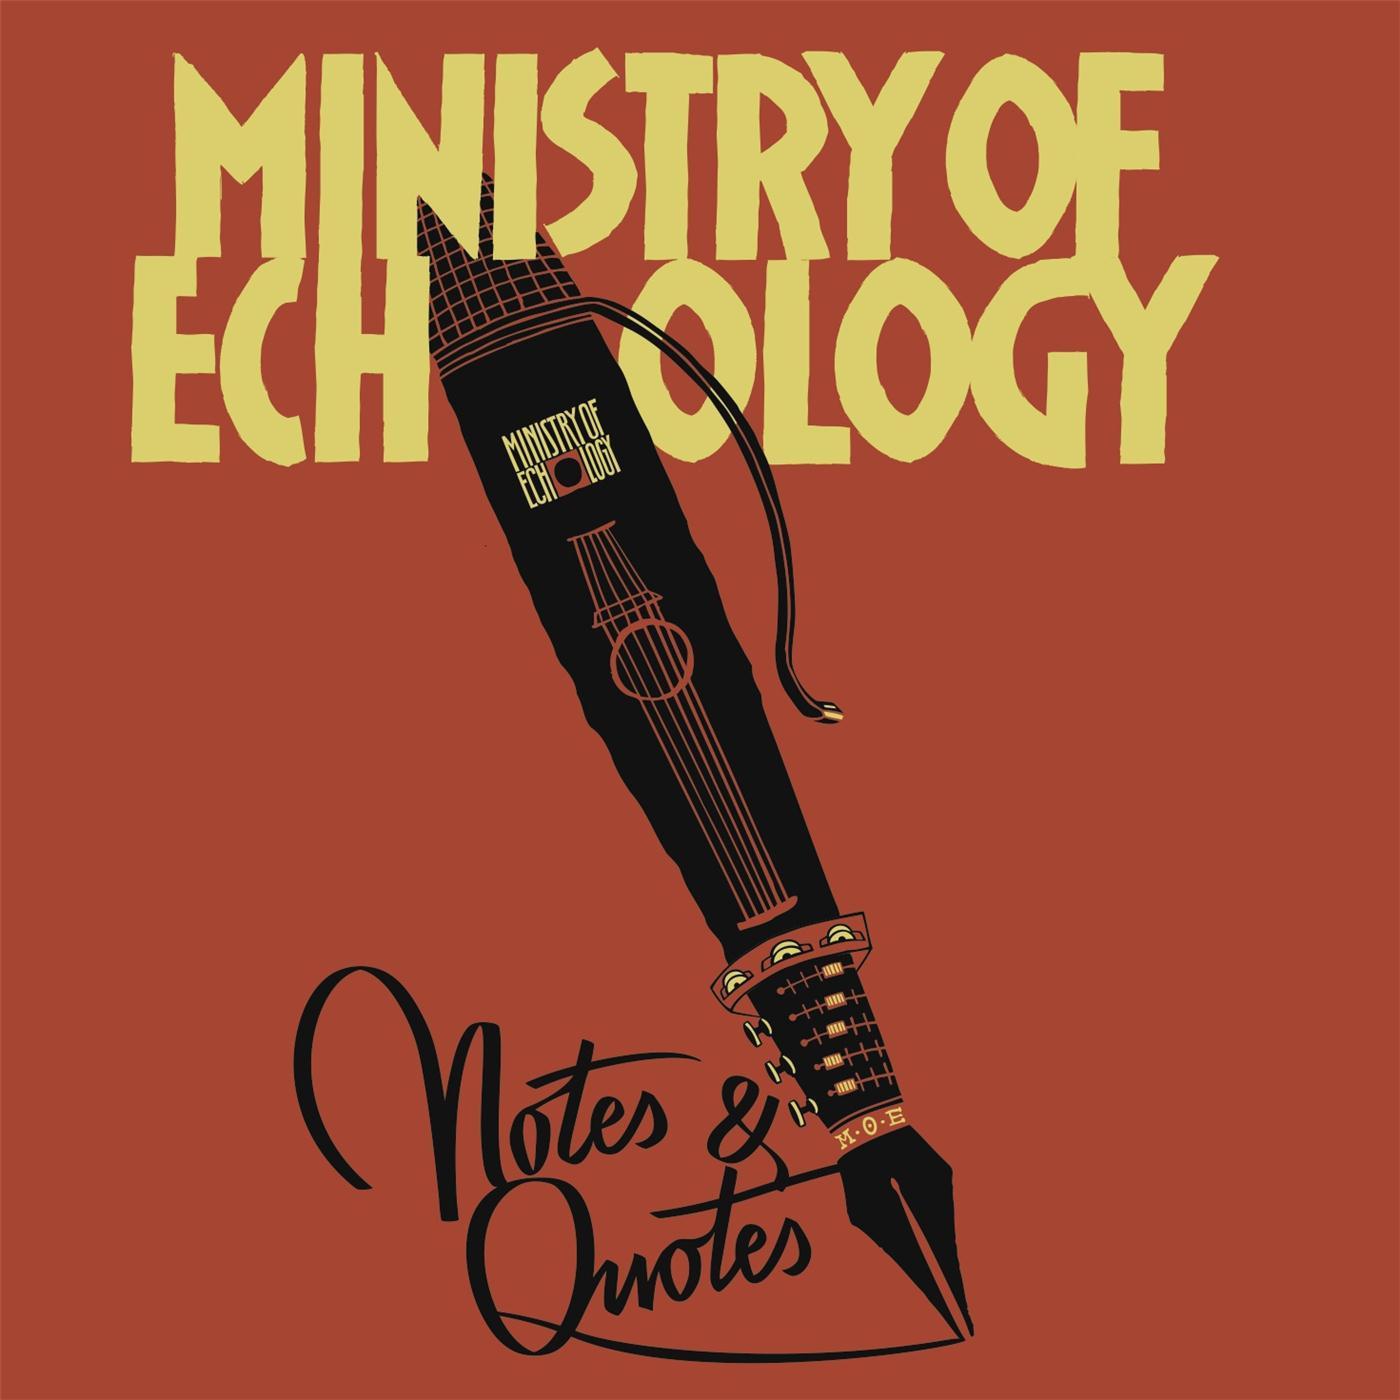 Ministry of Echology - Nyabinghi